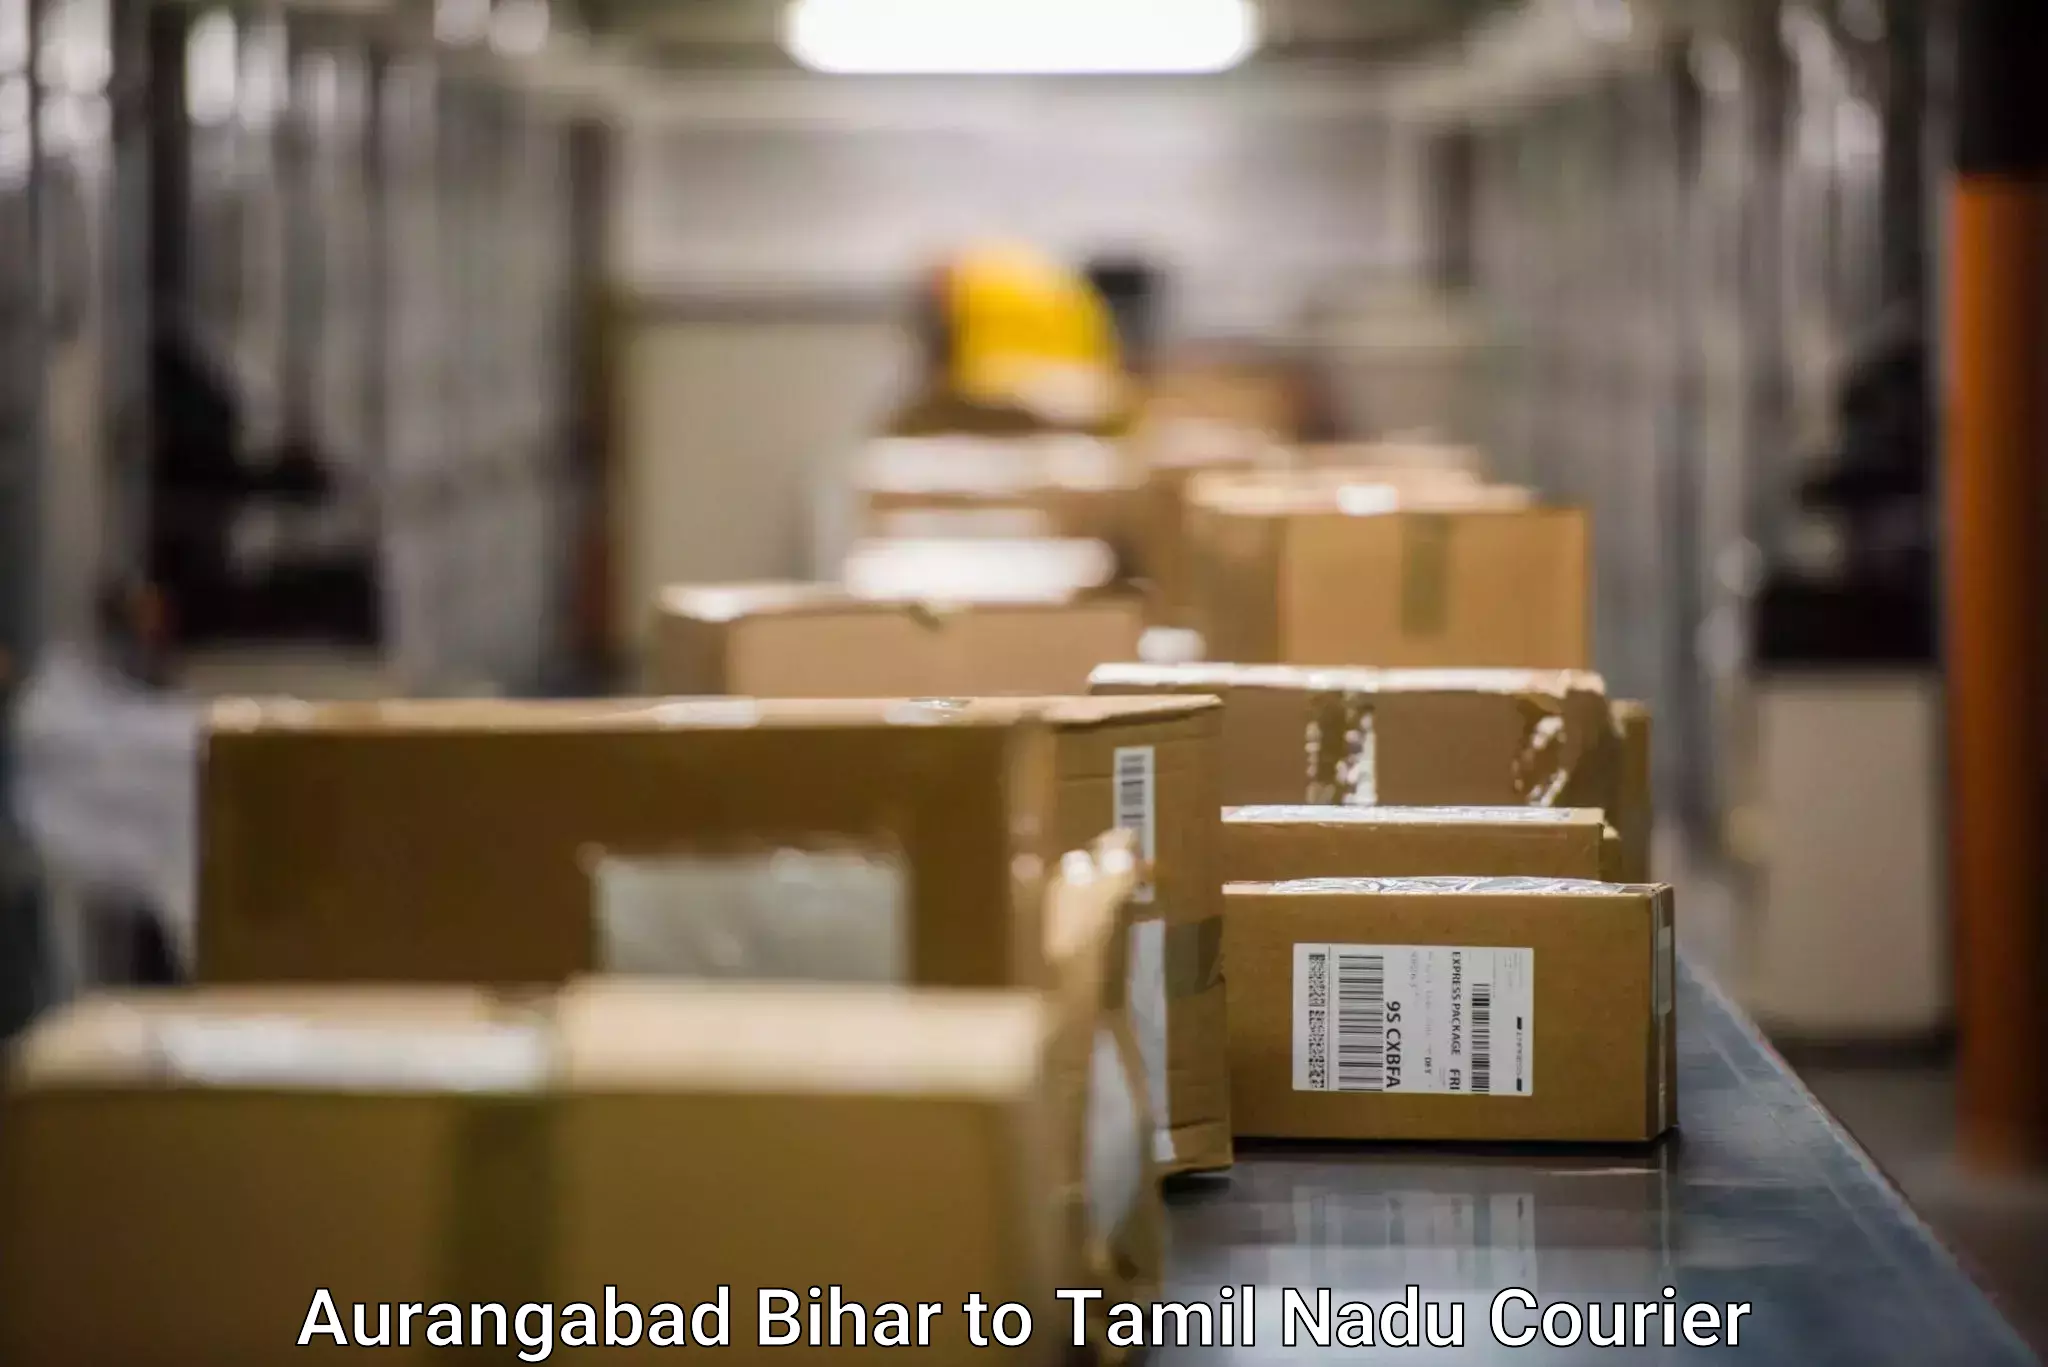 Courier service efficiency Aurangabad Bihar to Madukkarai